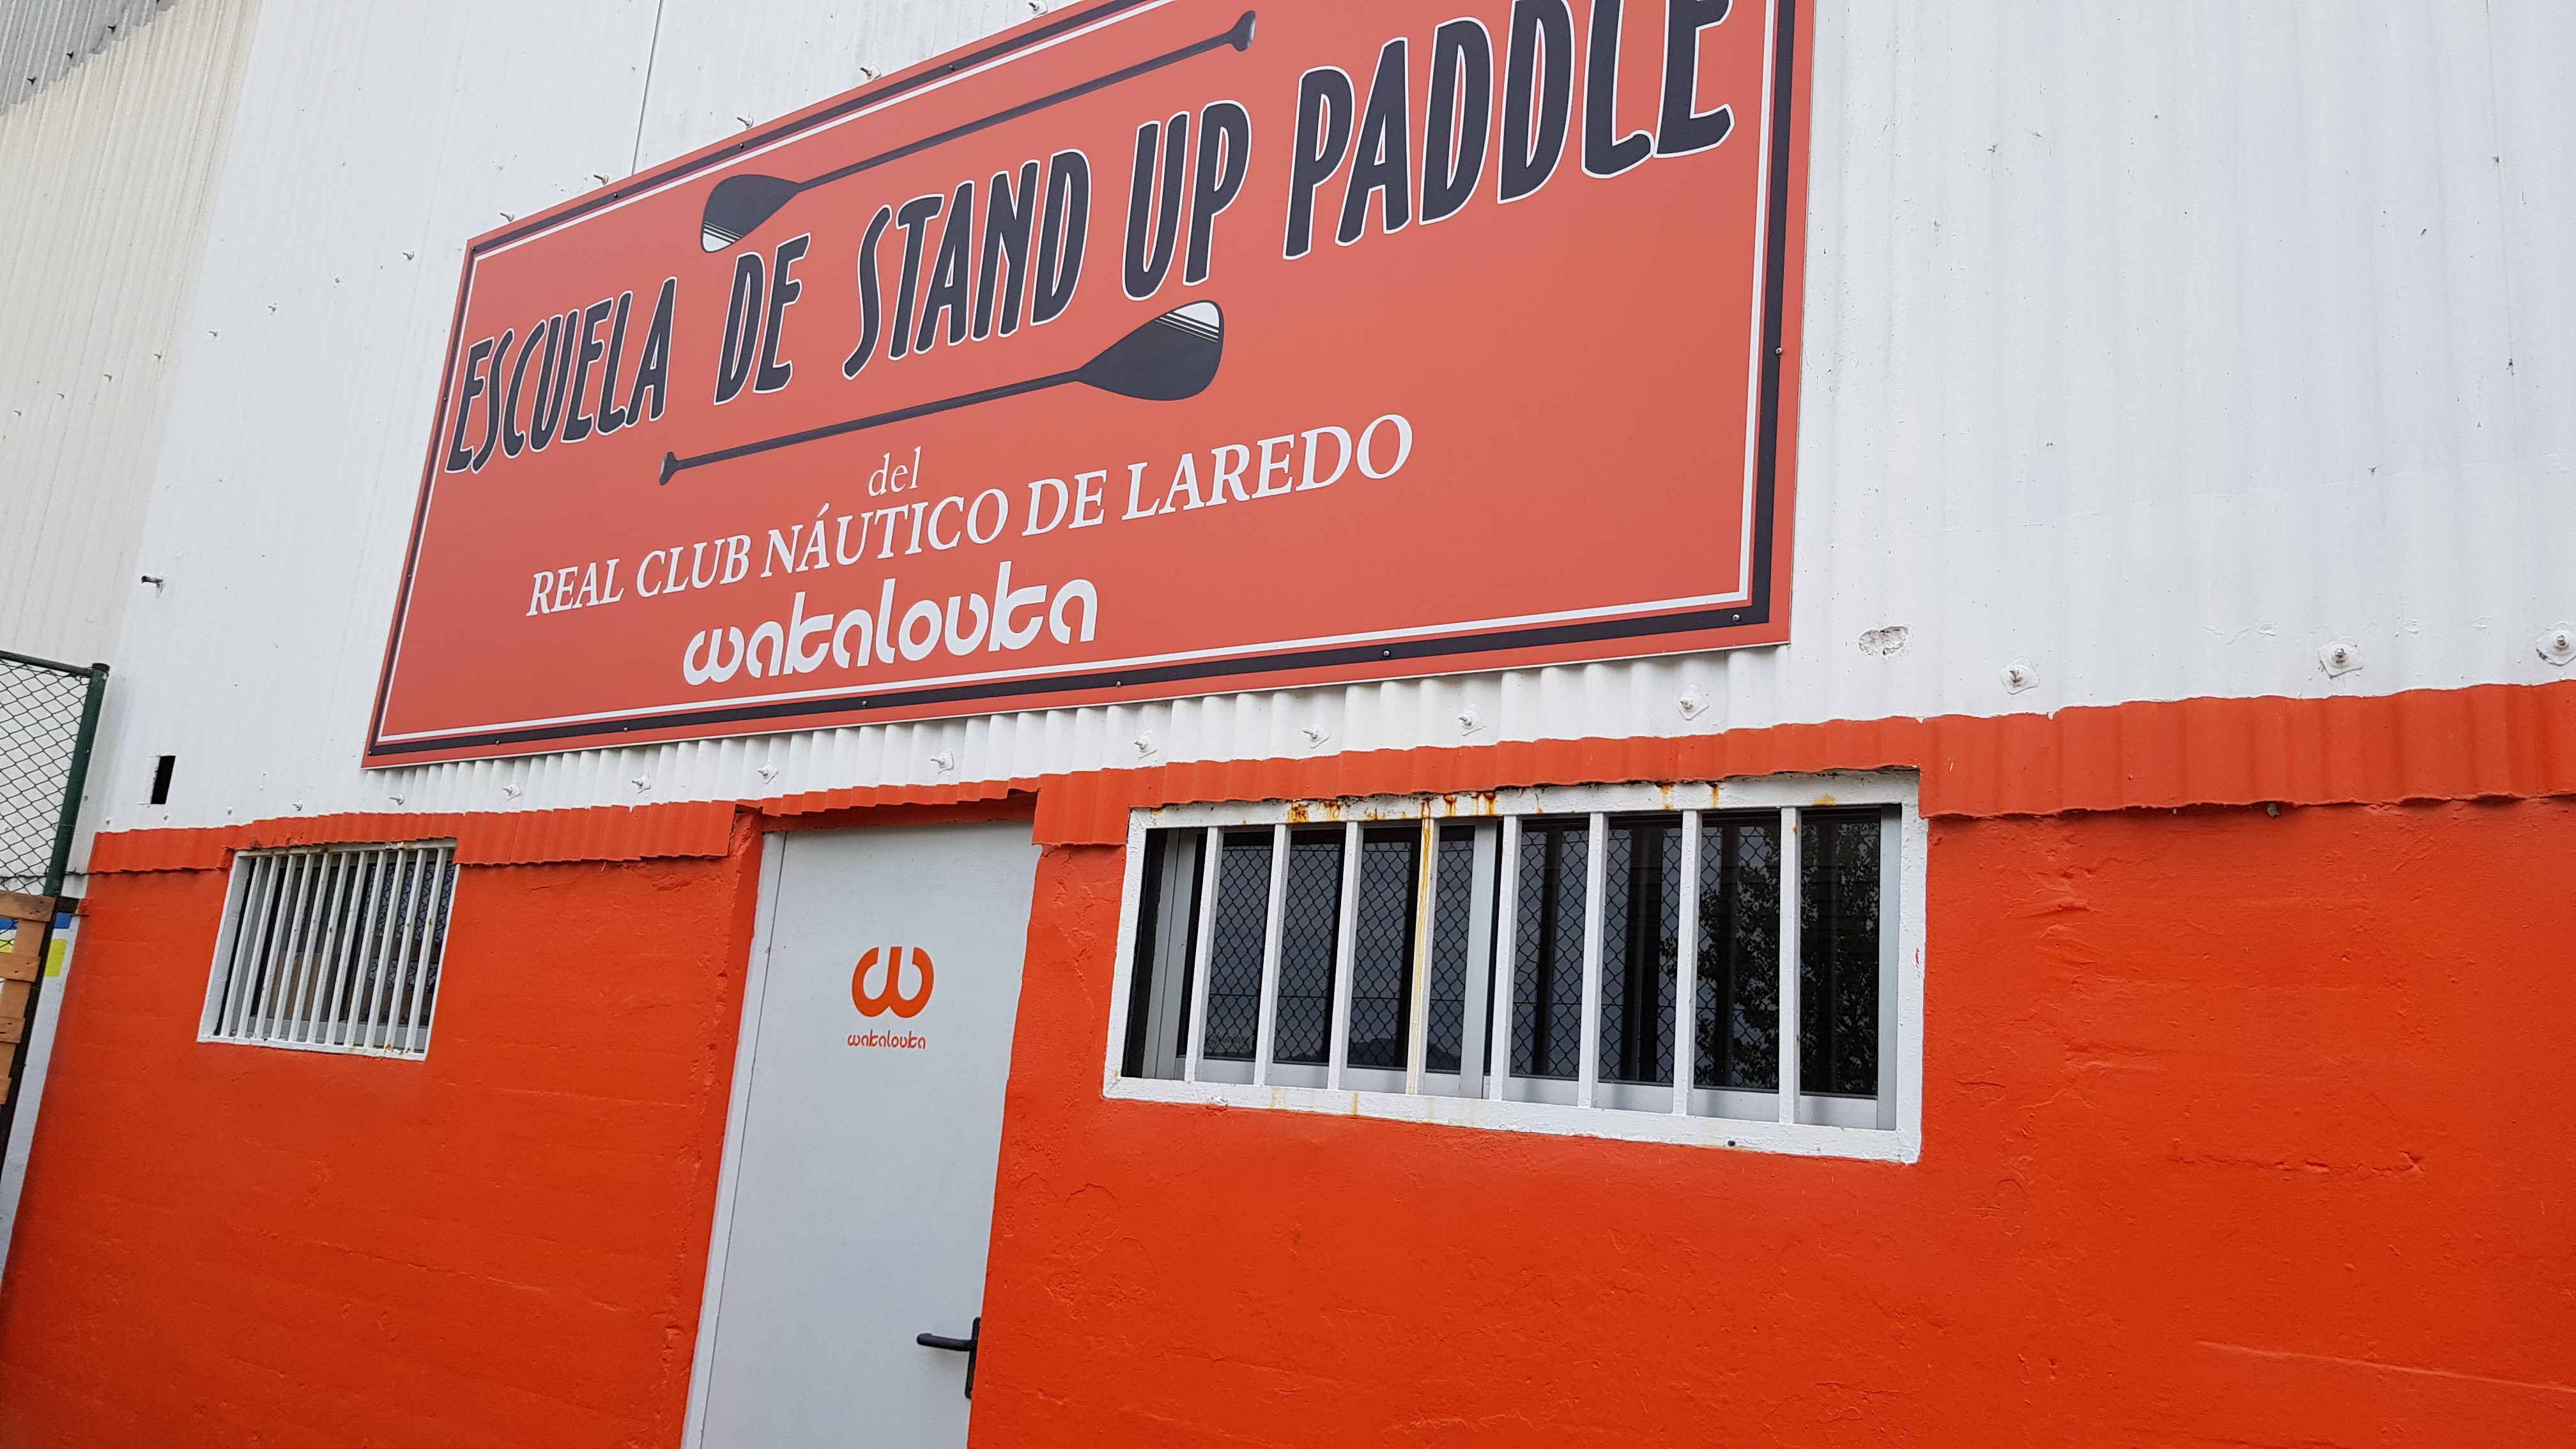 Escuela de Stand Up Paddle de Laredo